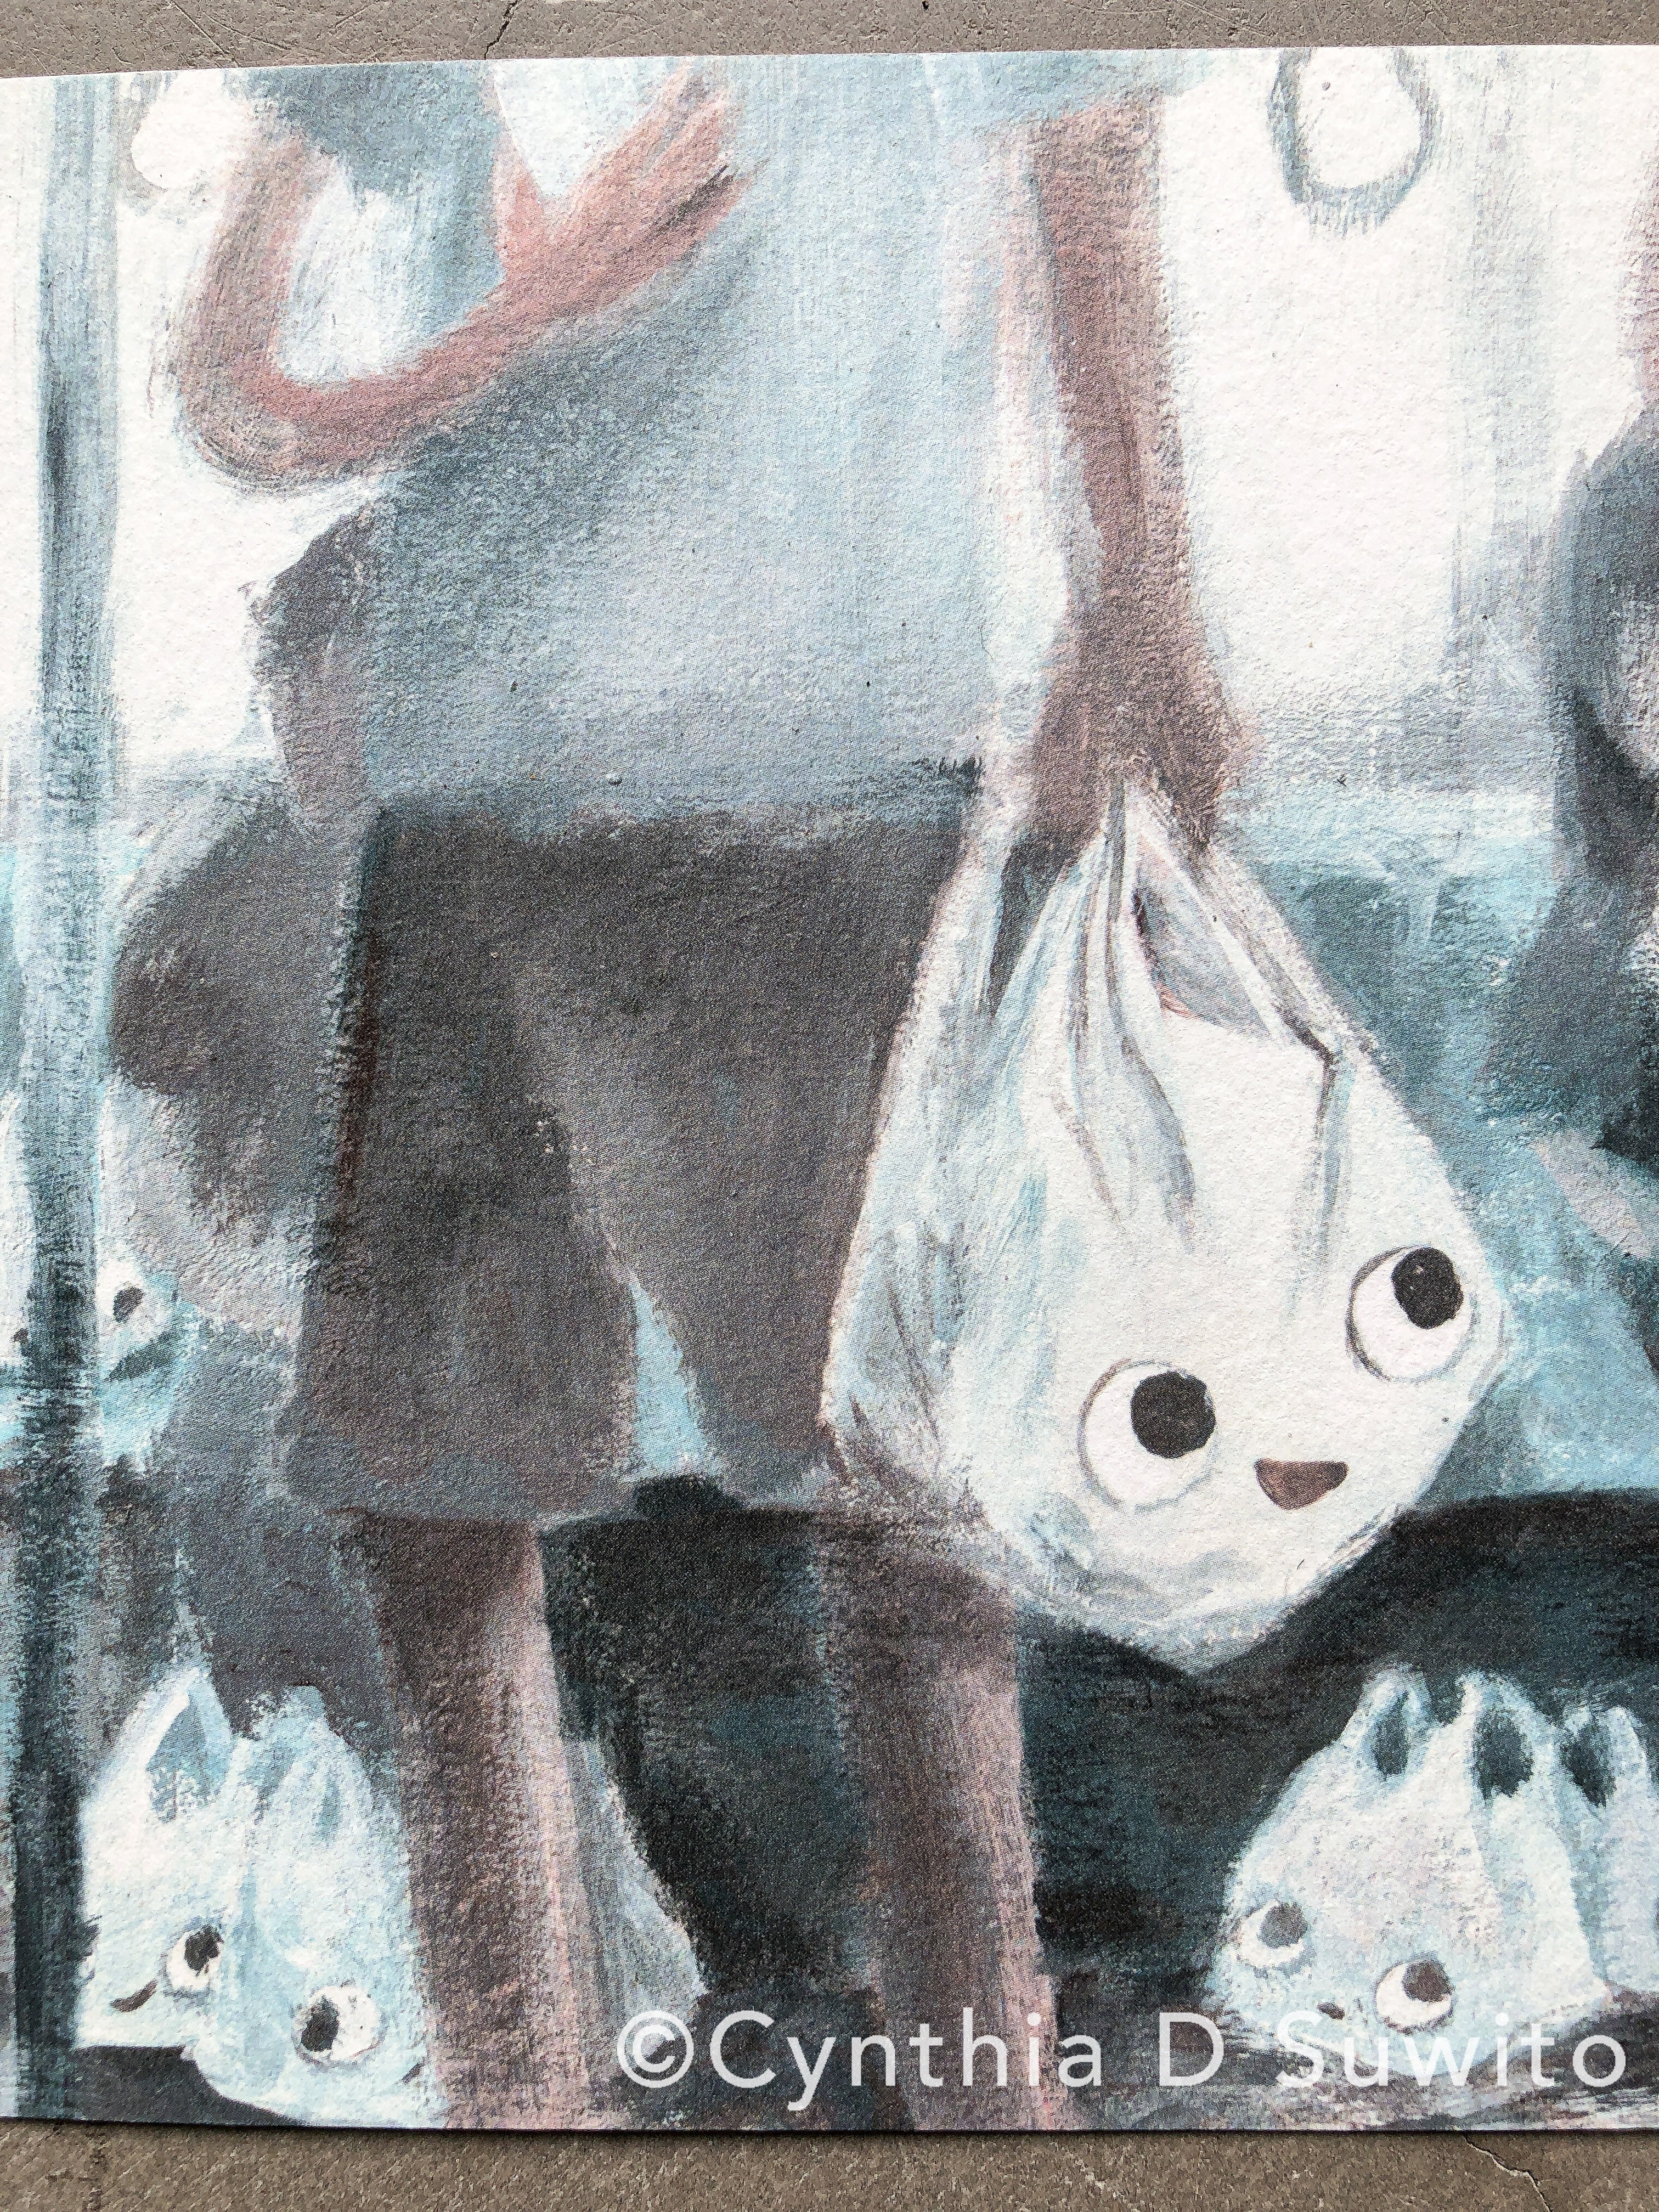 Kresek - Daily Life of Plastic Bags by Cynthia Delaney Suwito